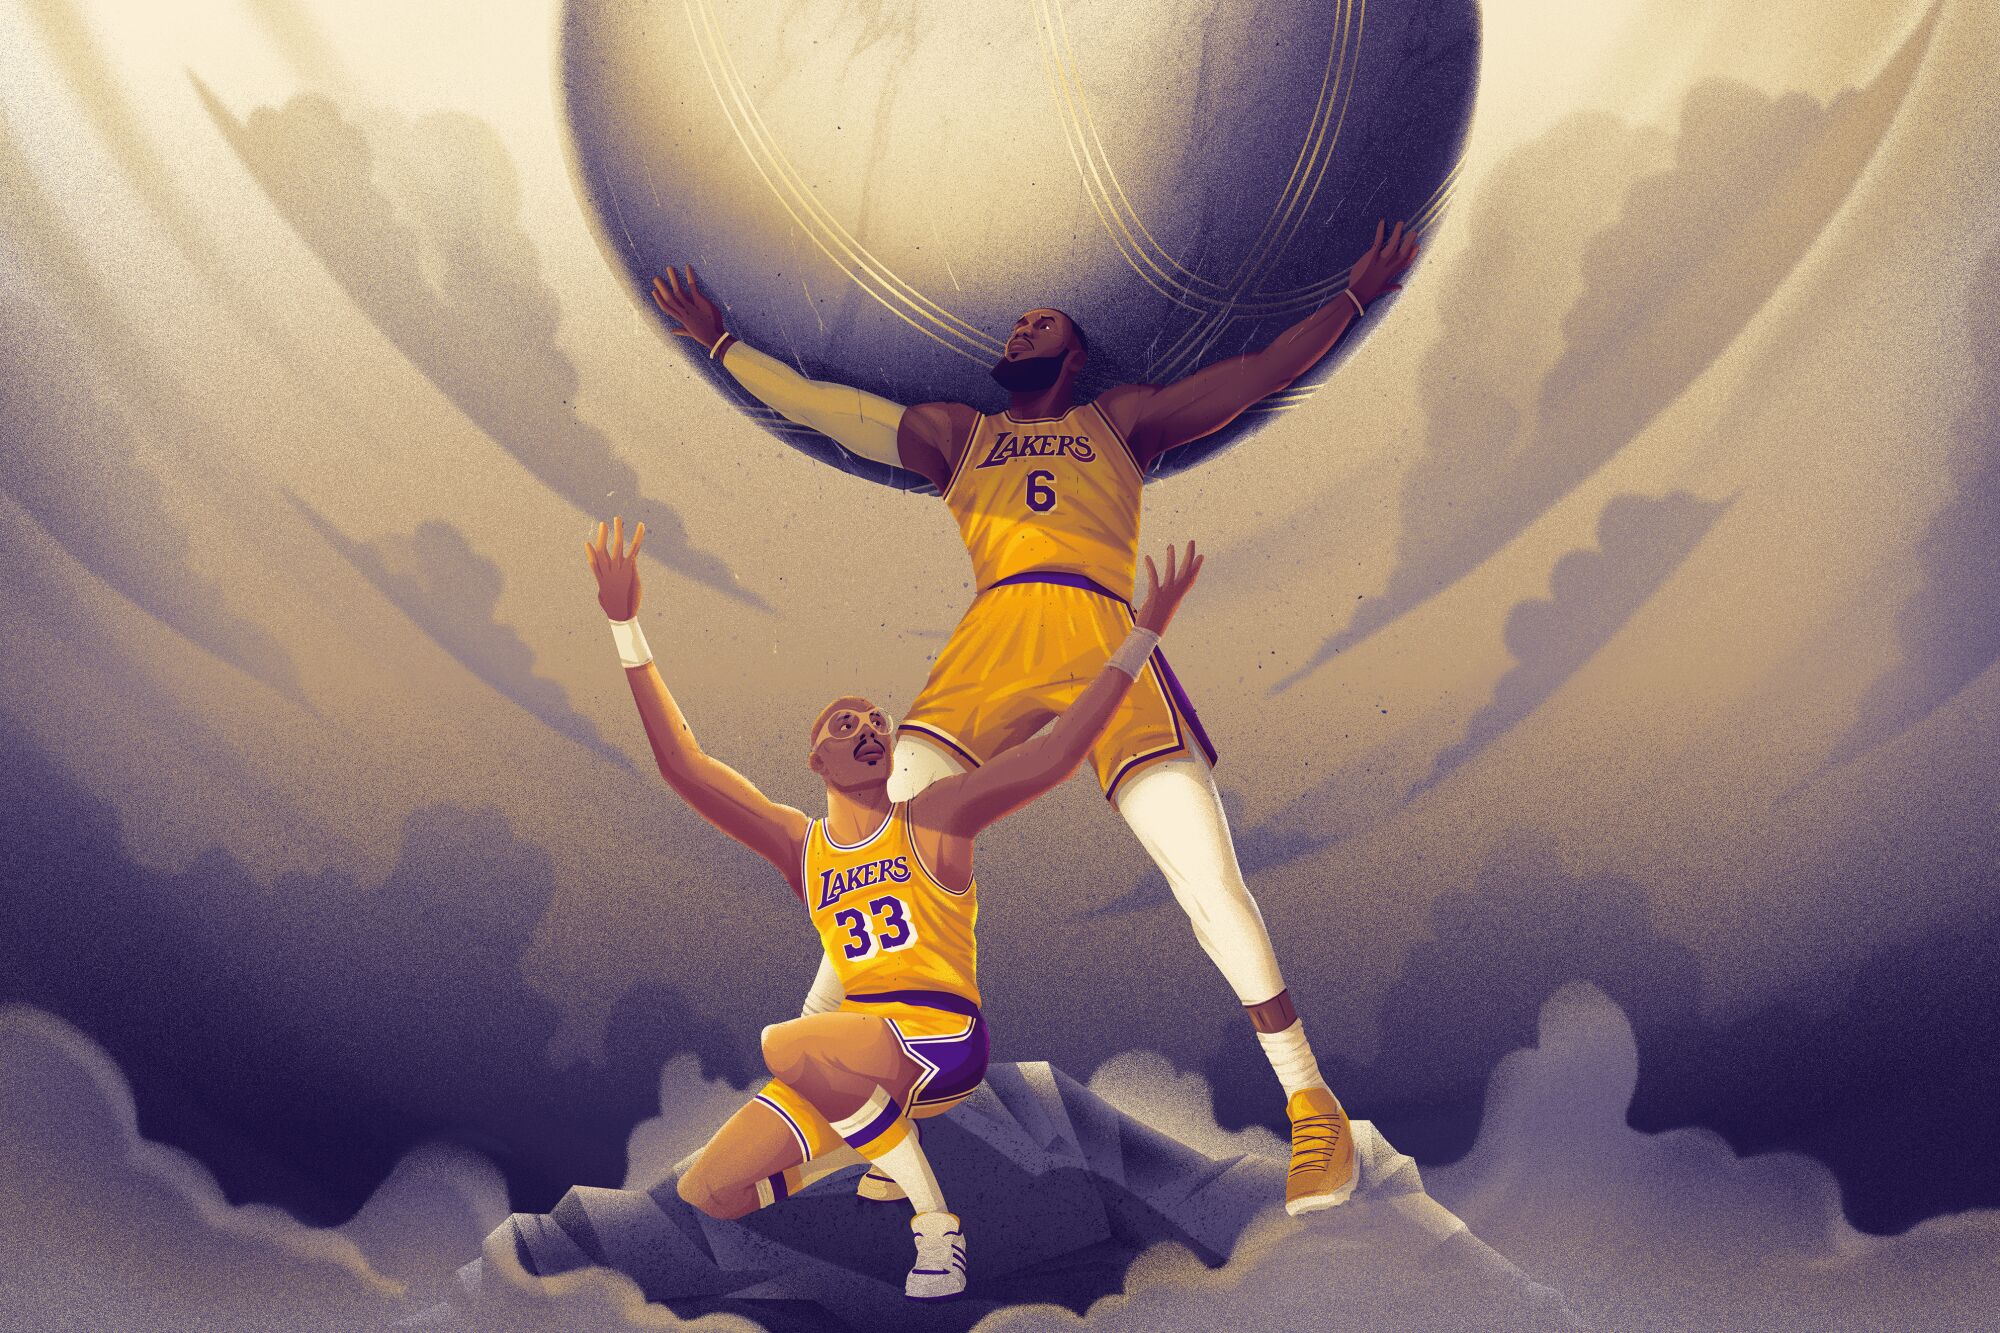 An illustration of LeBron James lifting a basketball over his head and Kareem Abdul-Jabbar.